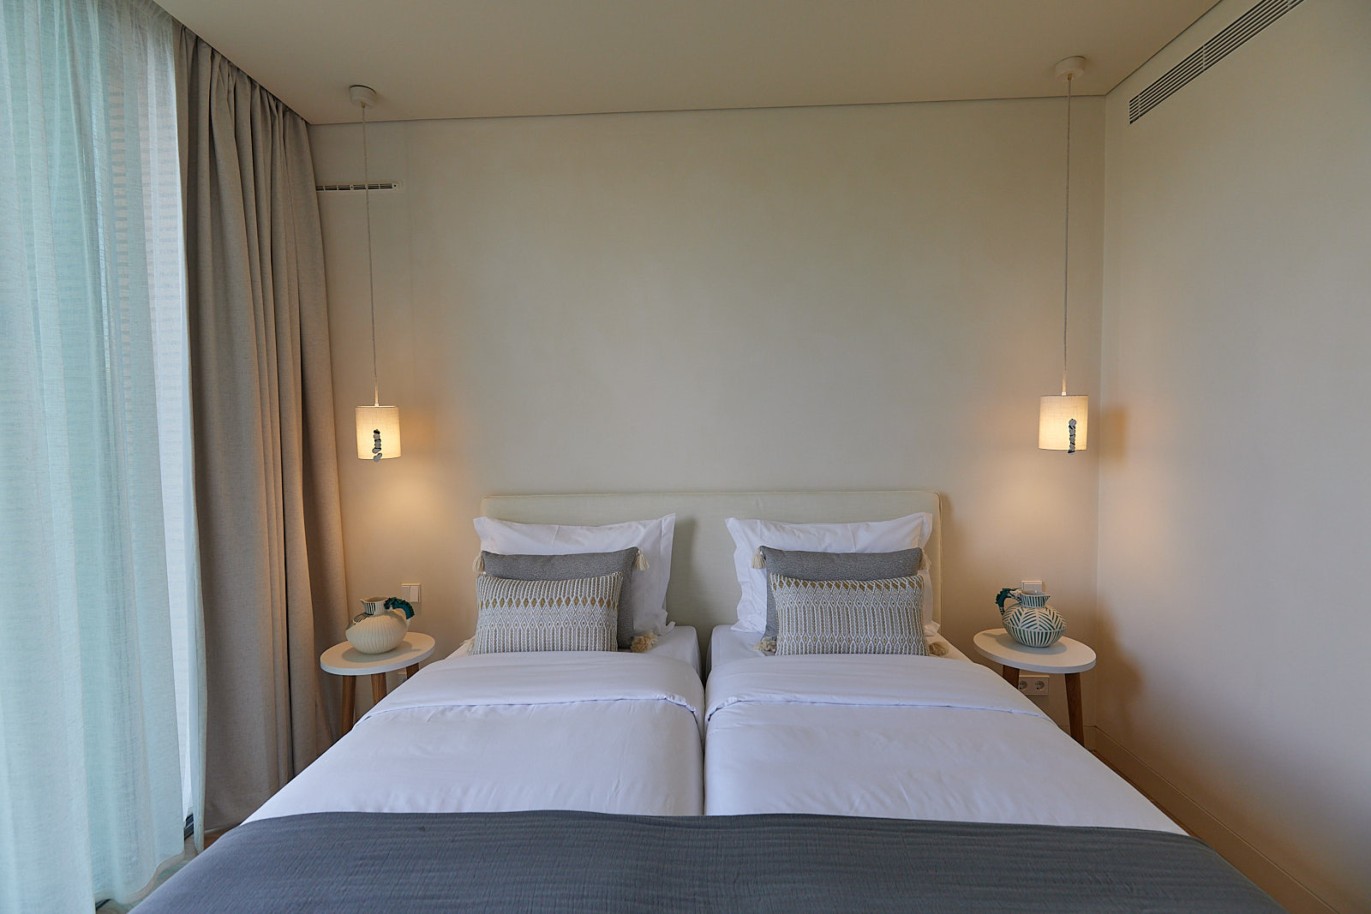 2 bedroom apartment in resort, for sale in Porches, Algarve_228798